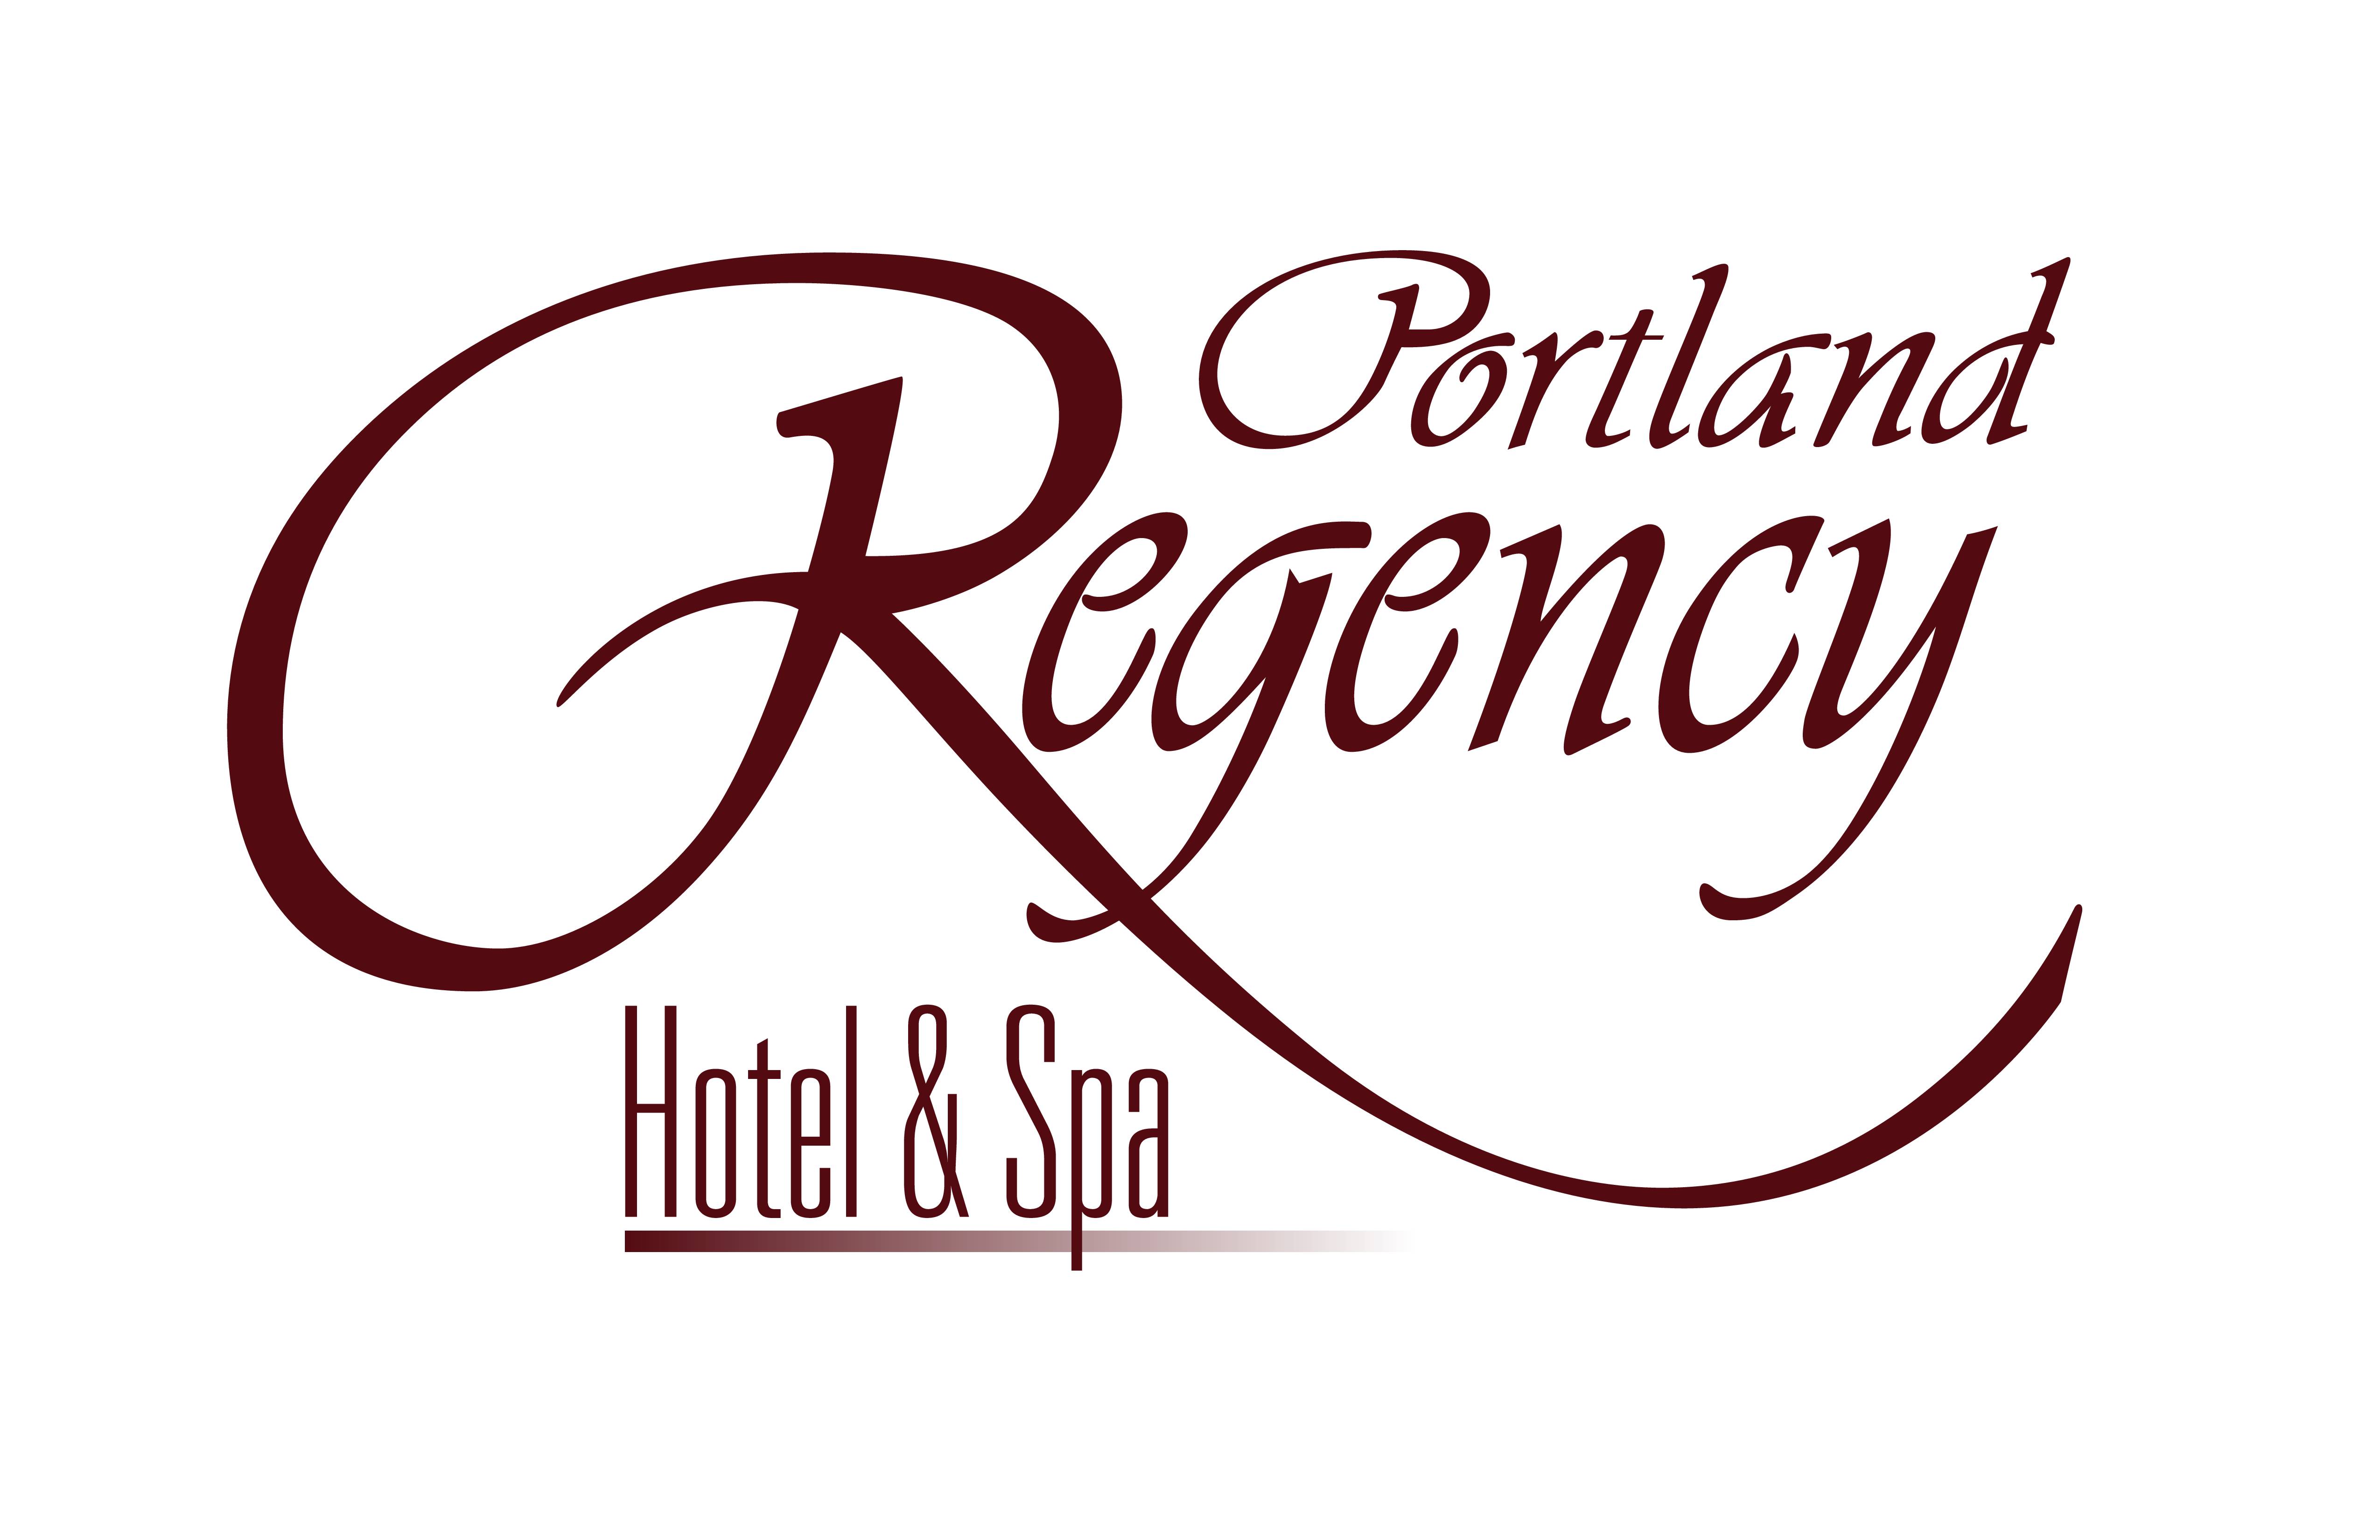 Portland Regebcy Hotel & Spa